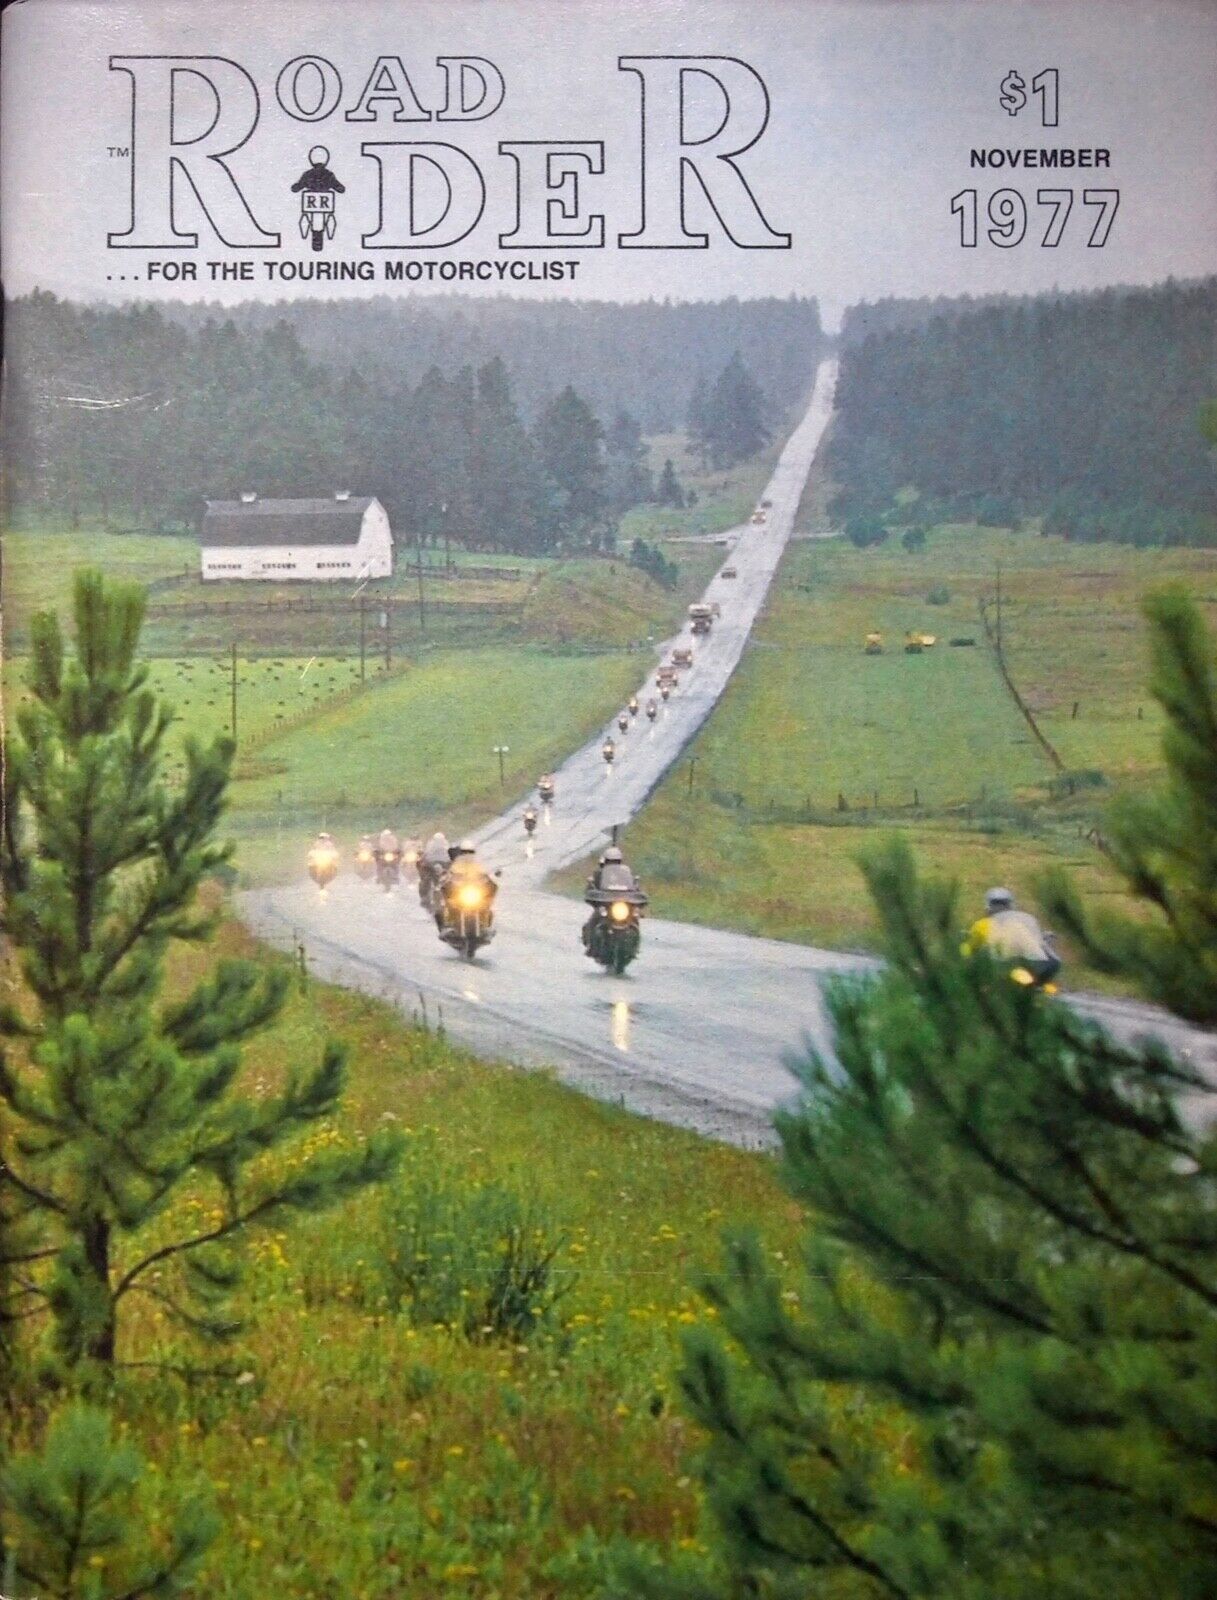 CIRCLING THE EVERGLADES, ROAD RIDER MAGAZINE, NOVEMBER 1977 VOLUME 8, NUMBER 11